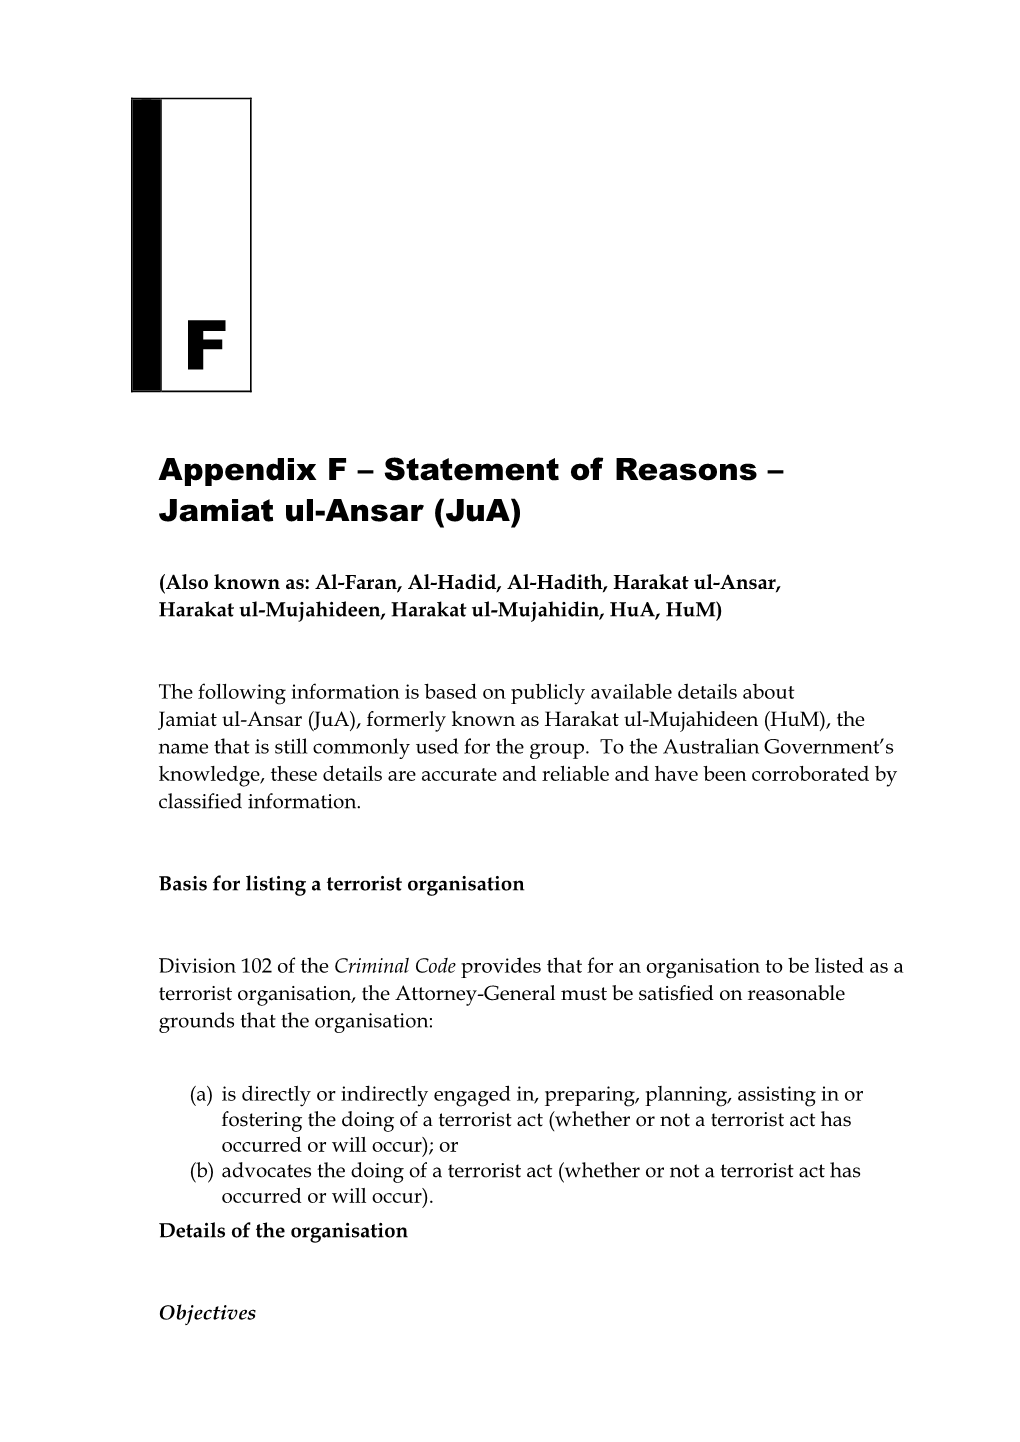 Appendix F – Statement of Reasons – Jamiat Ul-Ansar (Jua)